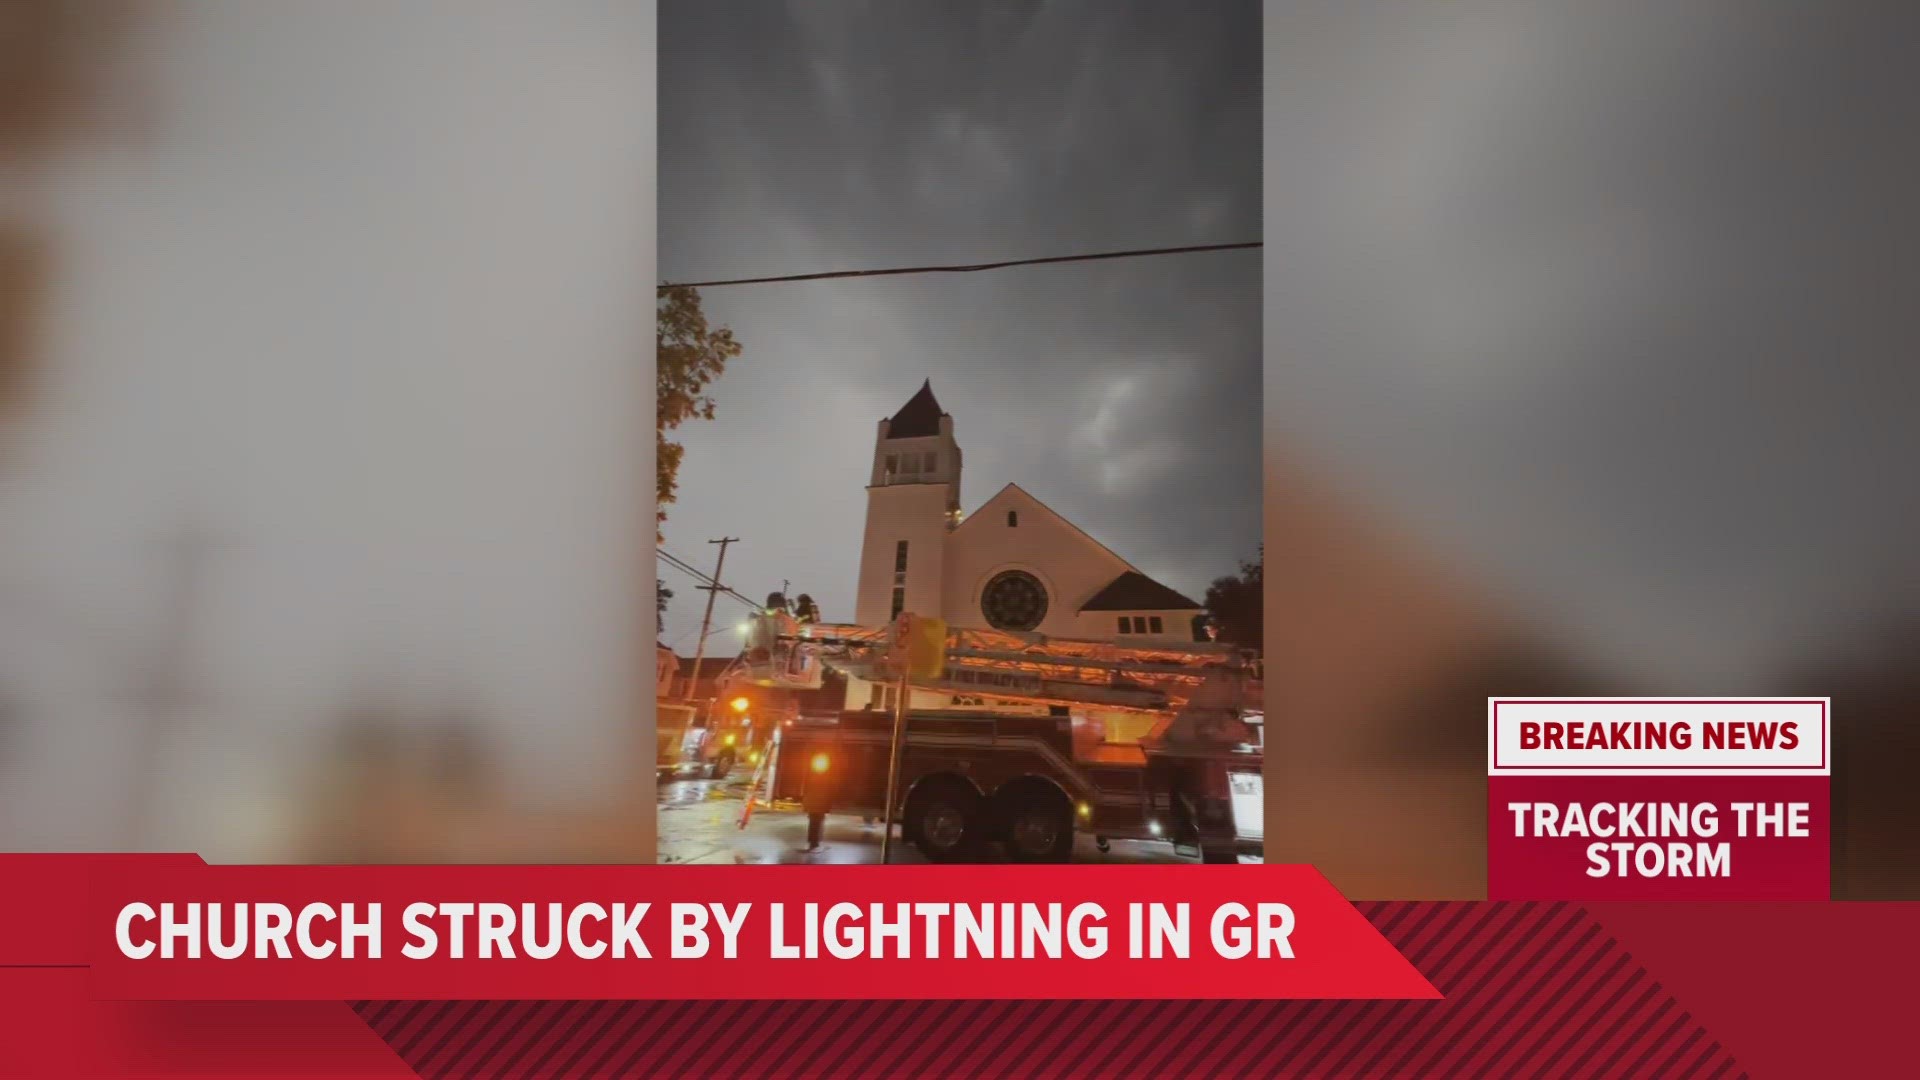 Thursday evening's storms left destruction across Grand Rapids, a church's bell tower was struck by lightning before catching fire.